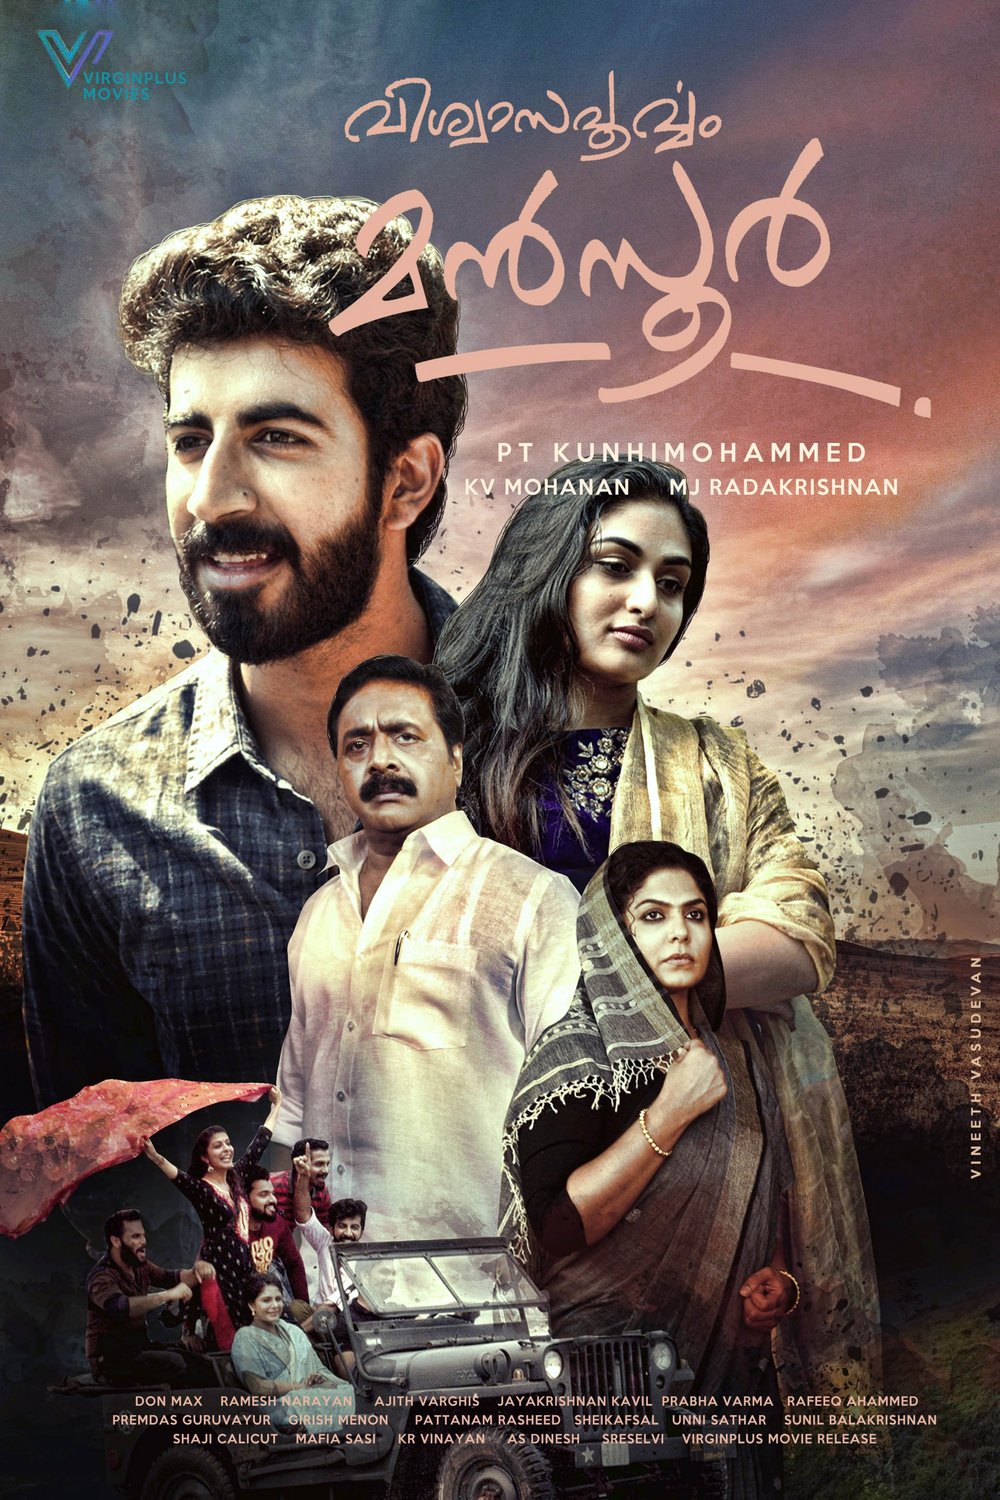 Malayalam poster of the movie Viswasapoorvam Mansoor